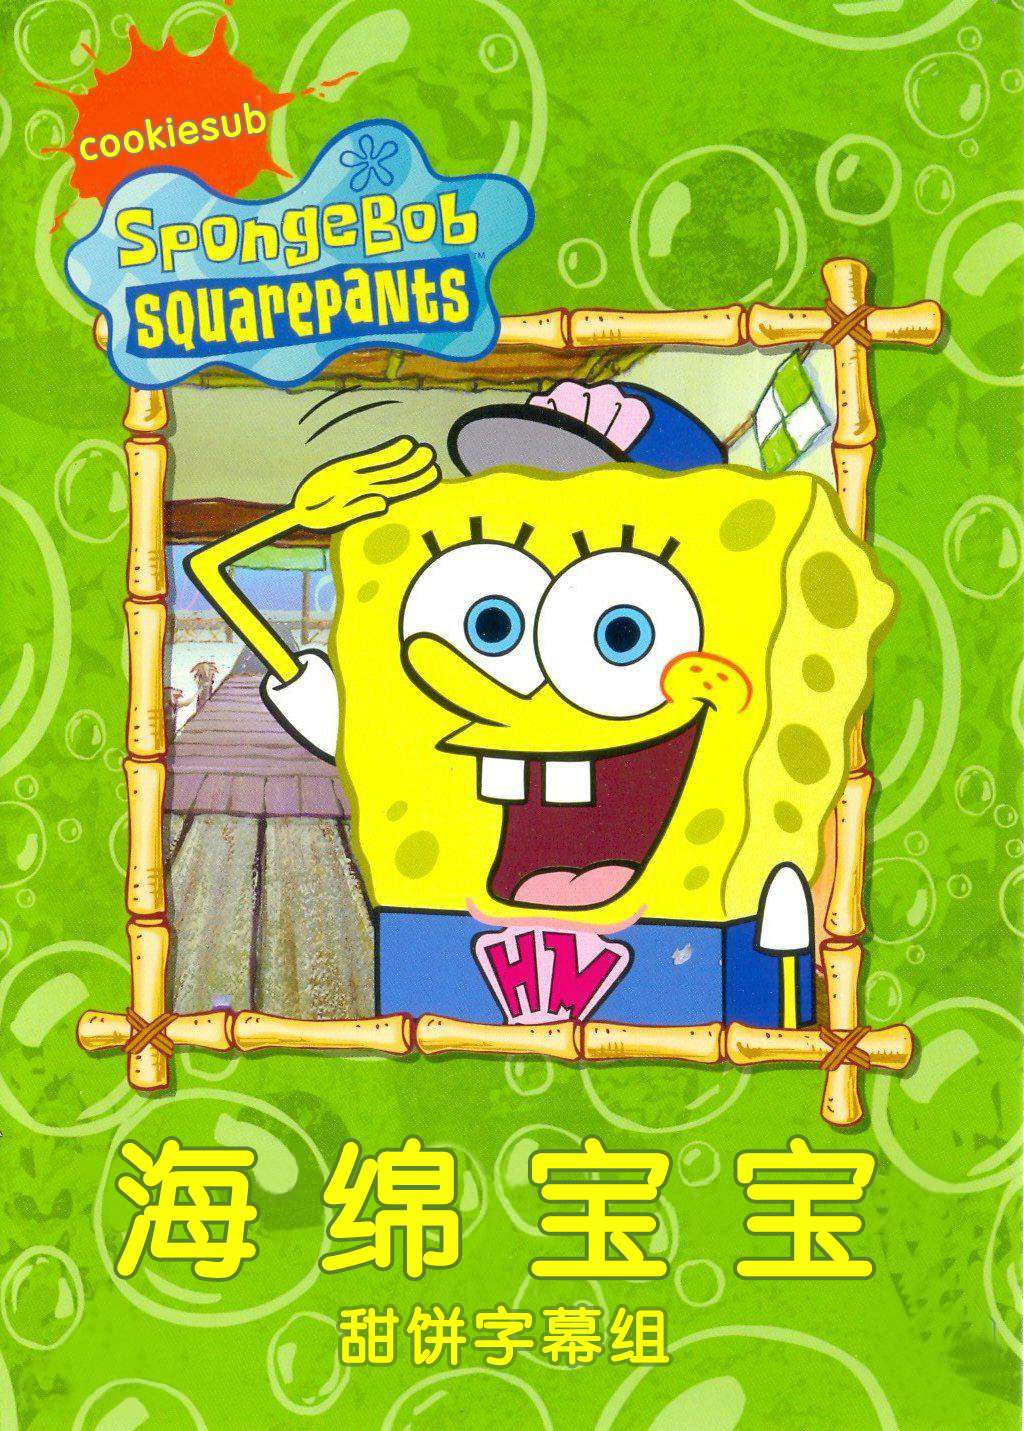 海绵宝宝 Spongebob Squarepants